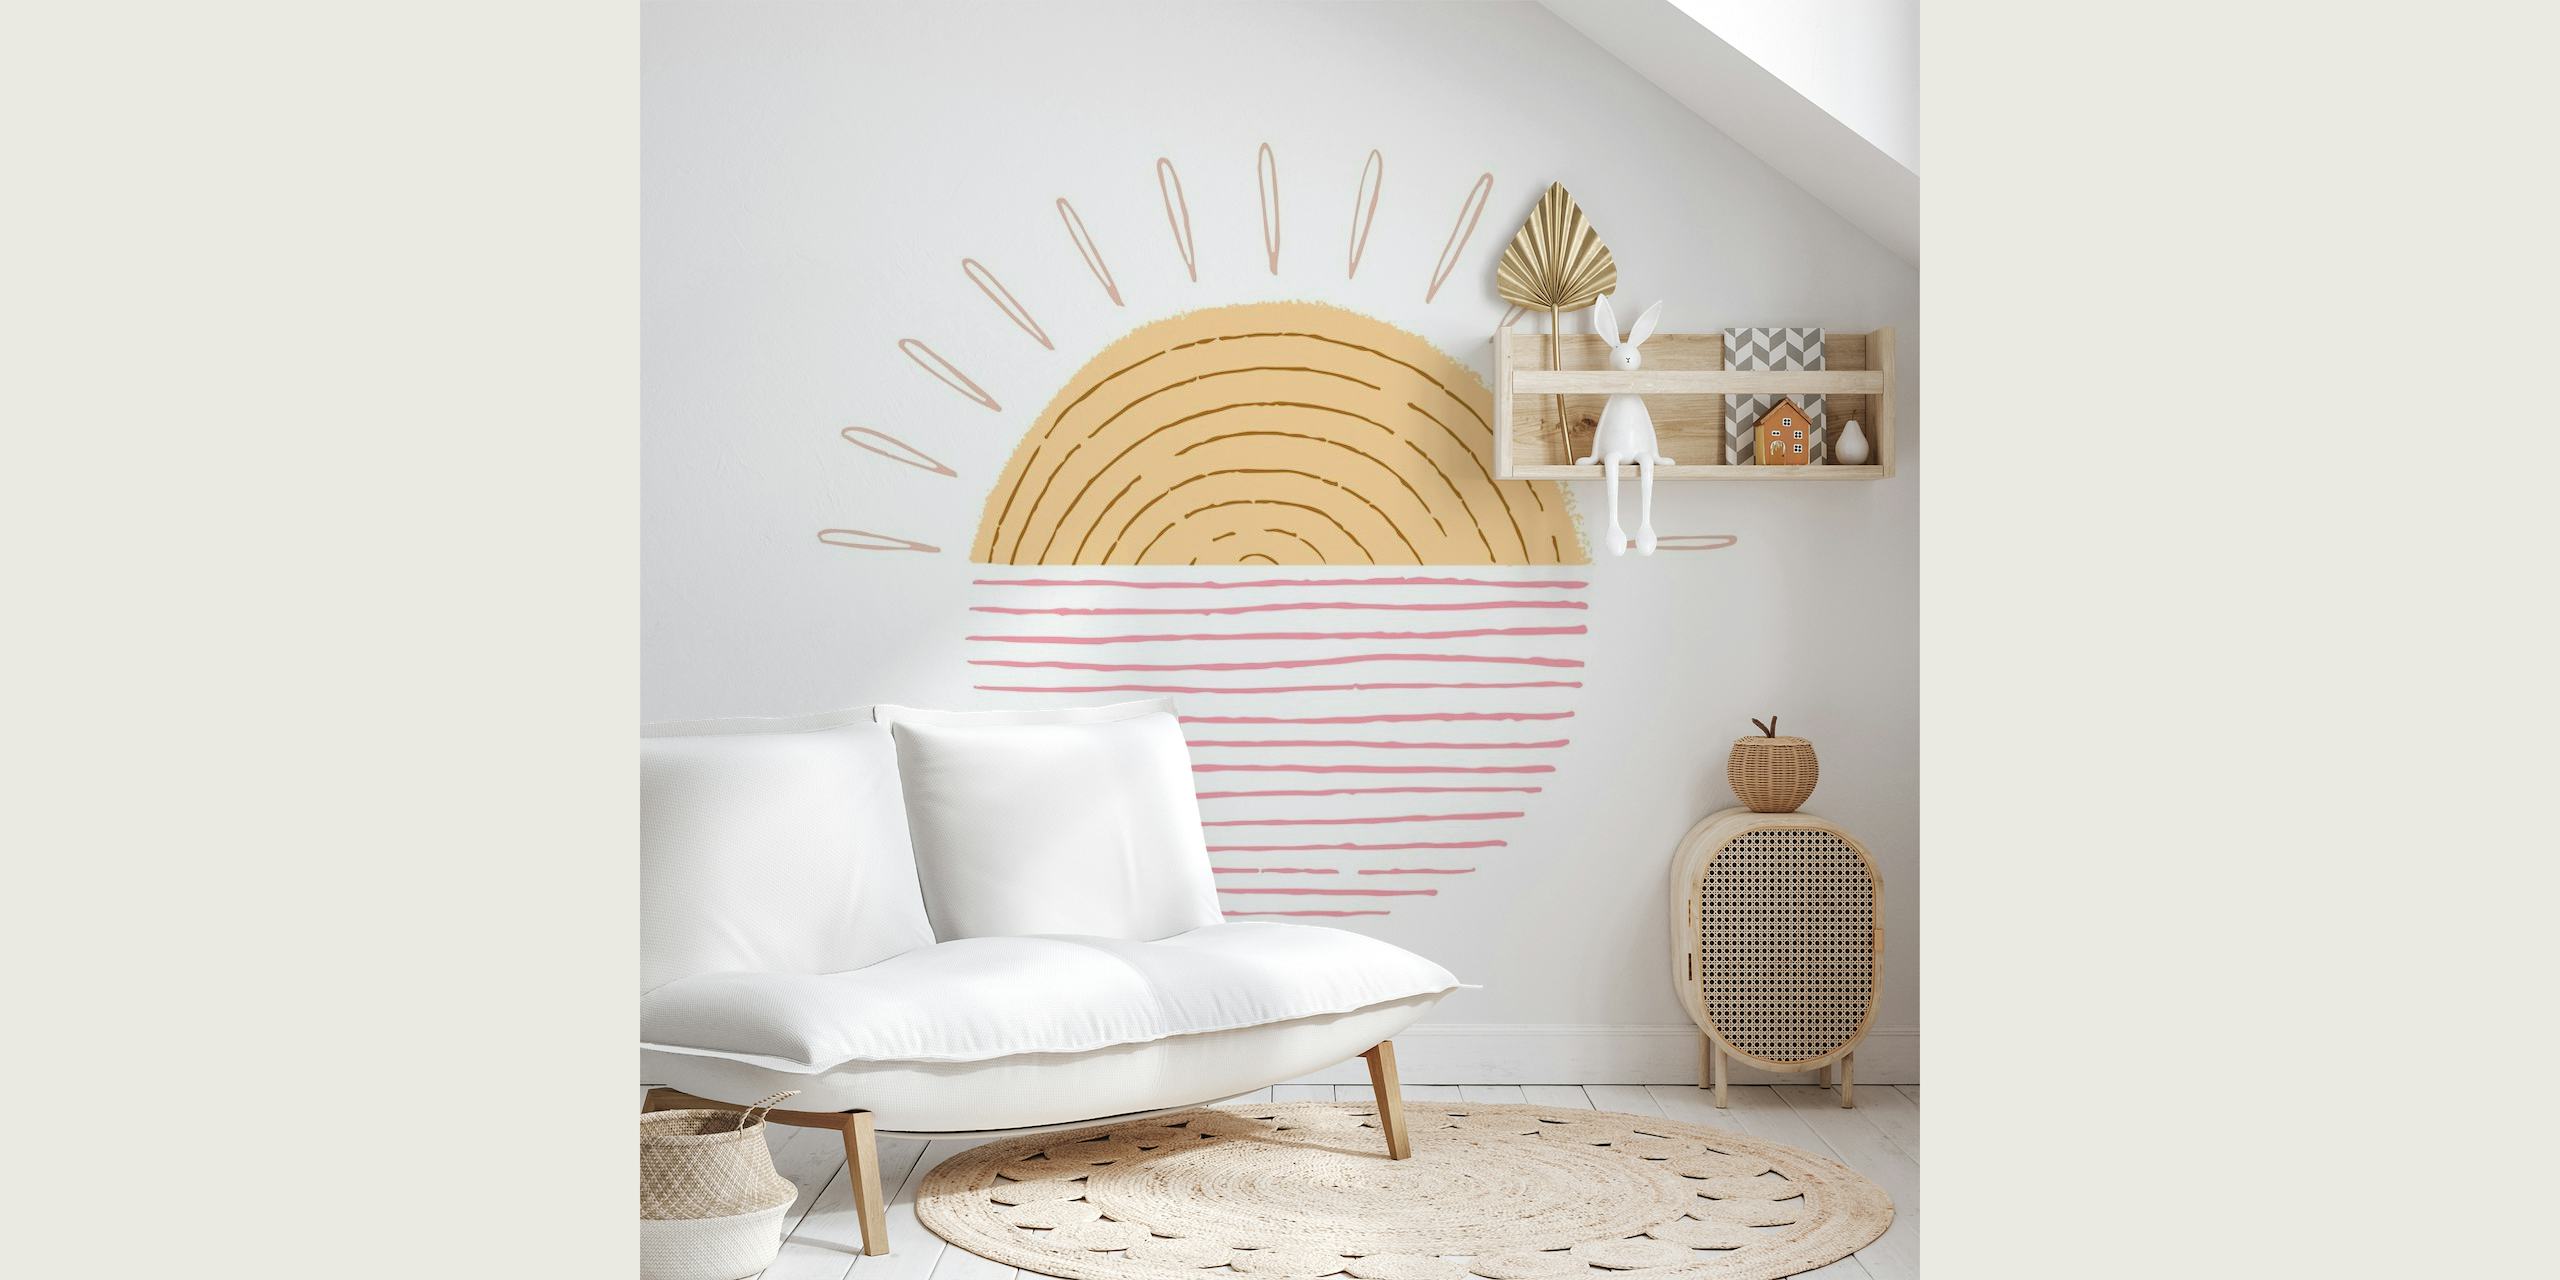 Illustrative Sweet Sunrise Mural with warm tones and minimalist design